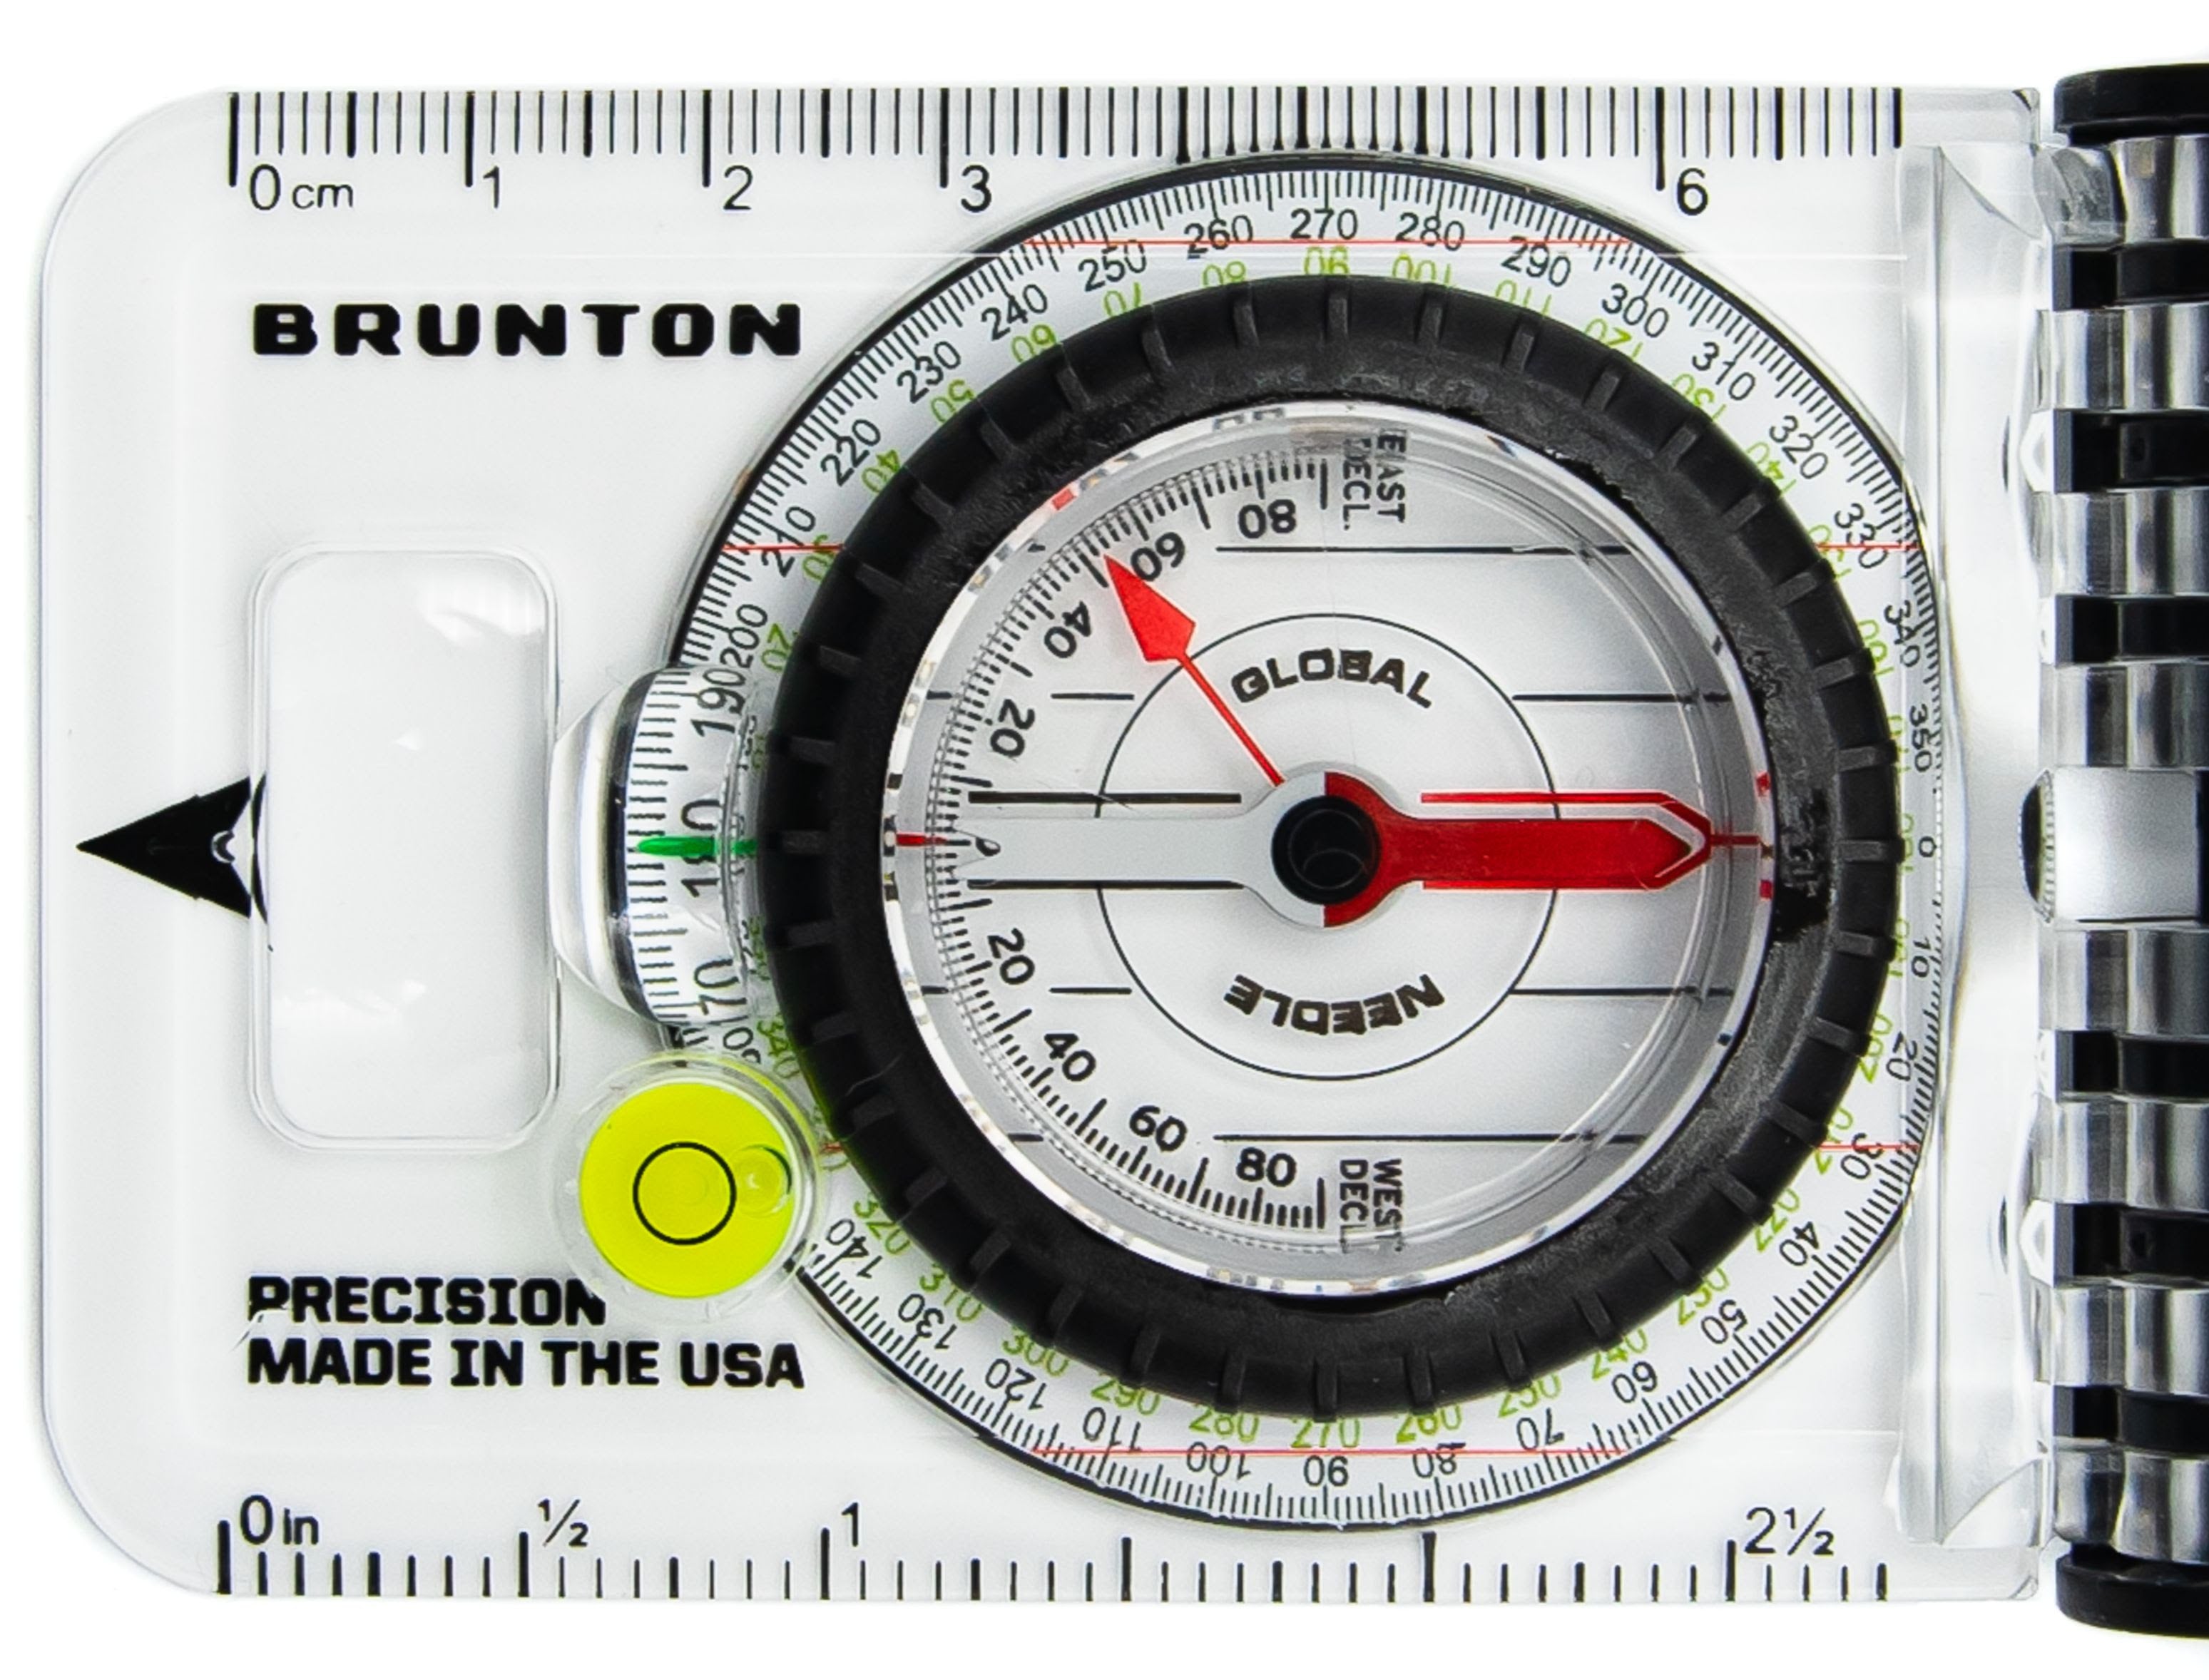 Kompas Brunton TRUARC3, Keseimbangan global